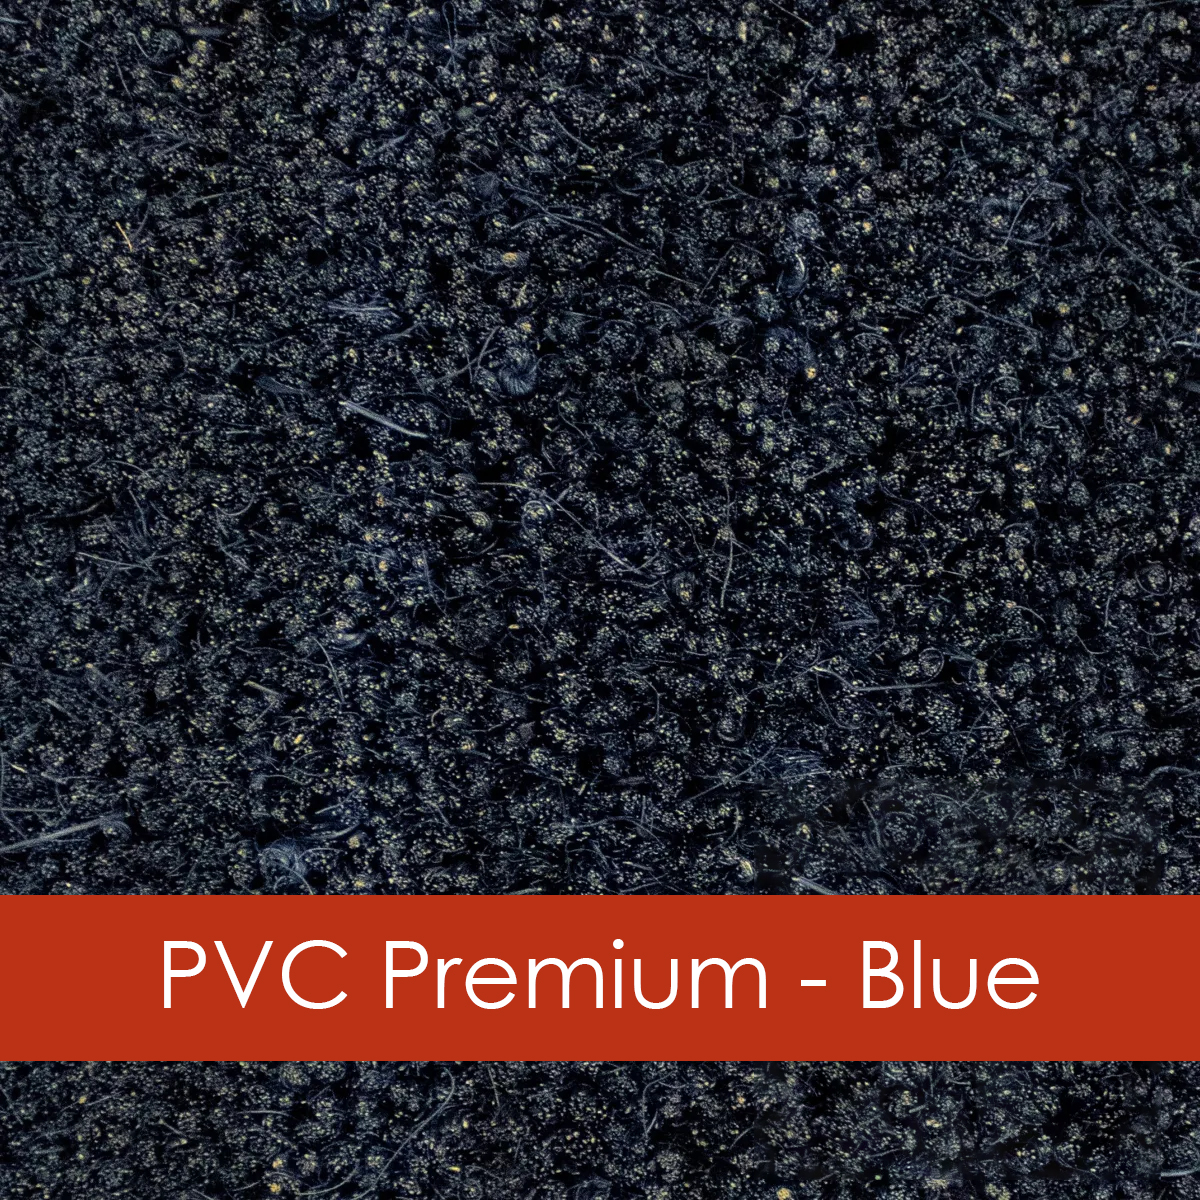 Blue PVC backed coir premium grade